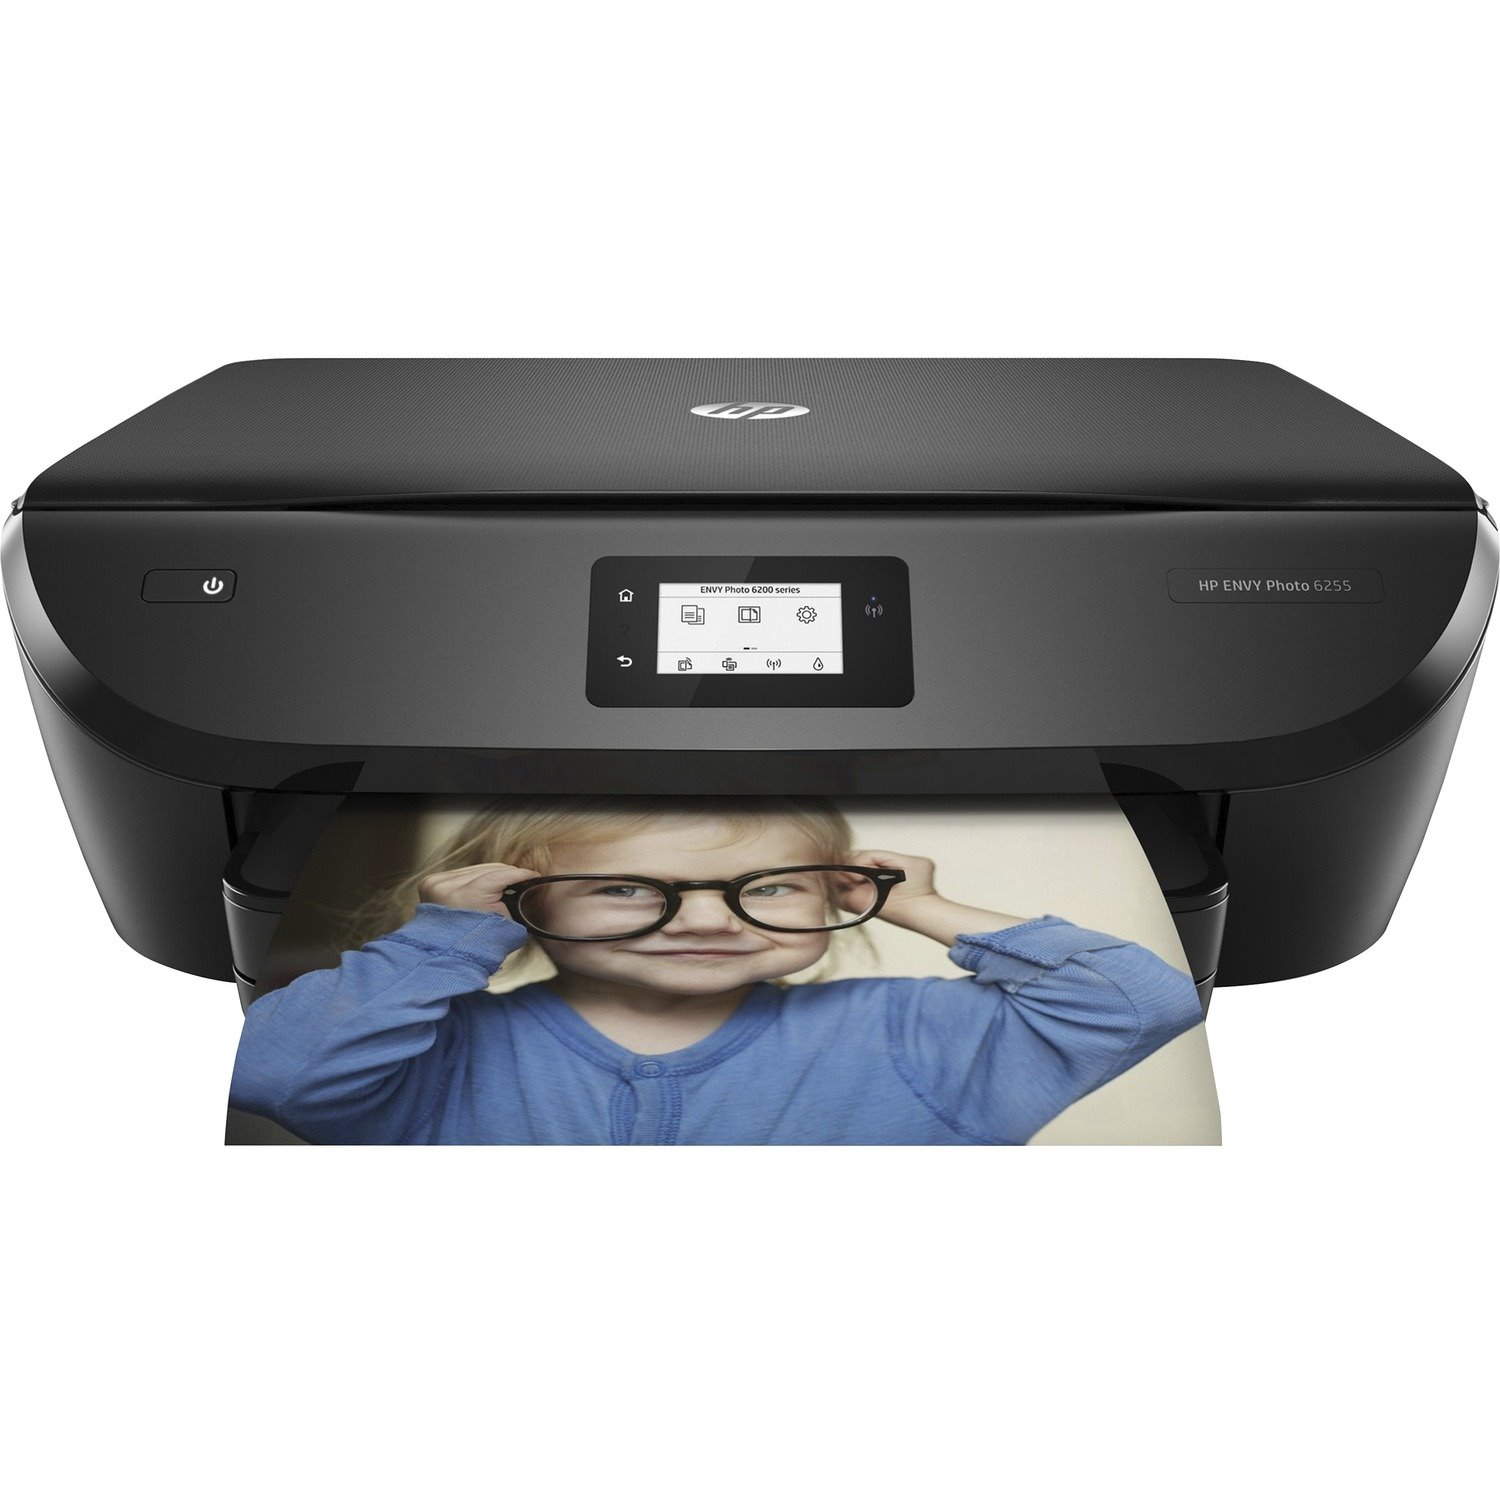 HP Envy 6255 Wireless Inkjet Multifunction Printer - Color